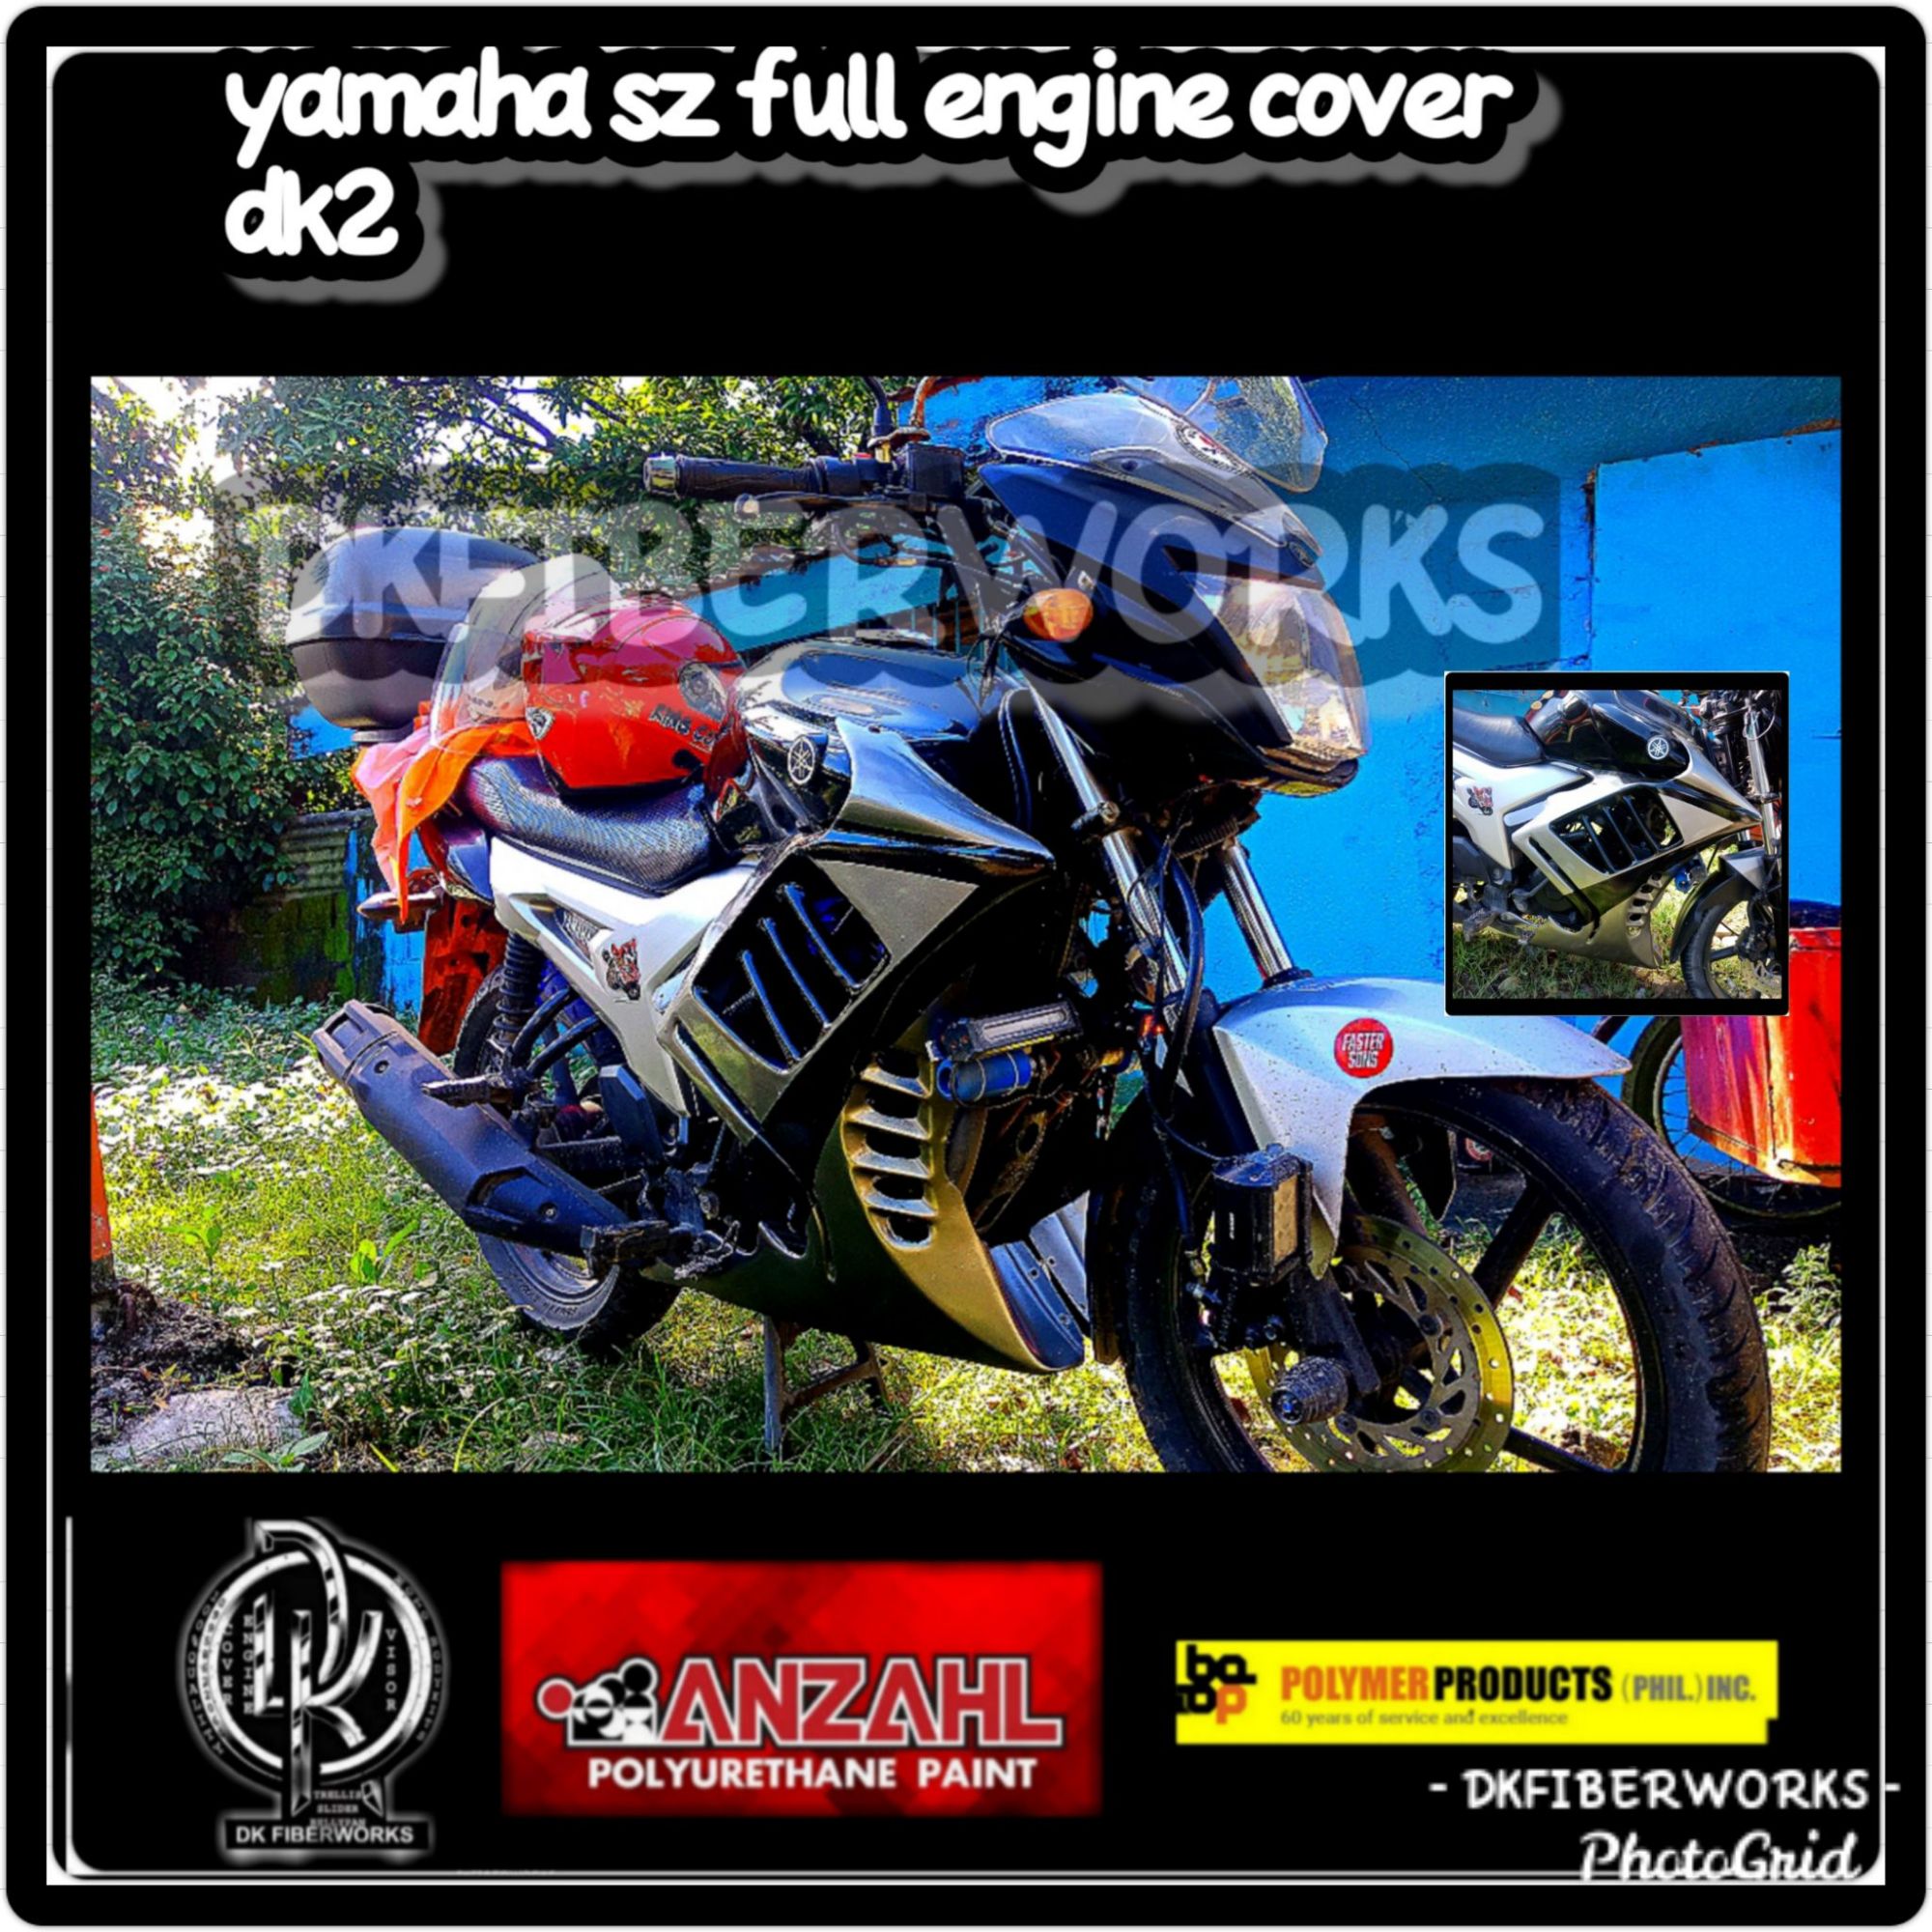 yamaha sz r full engine cover